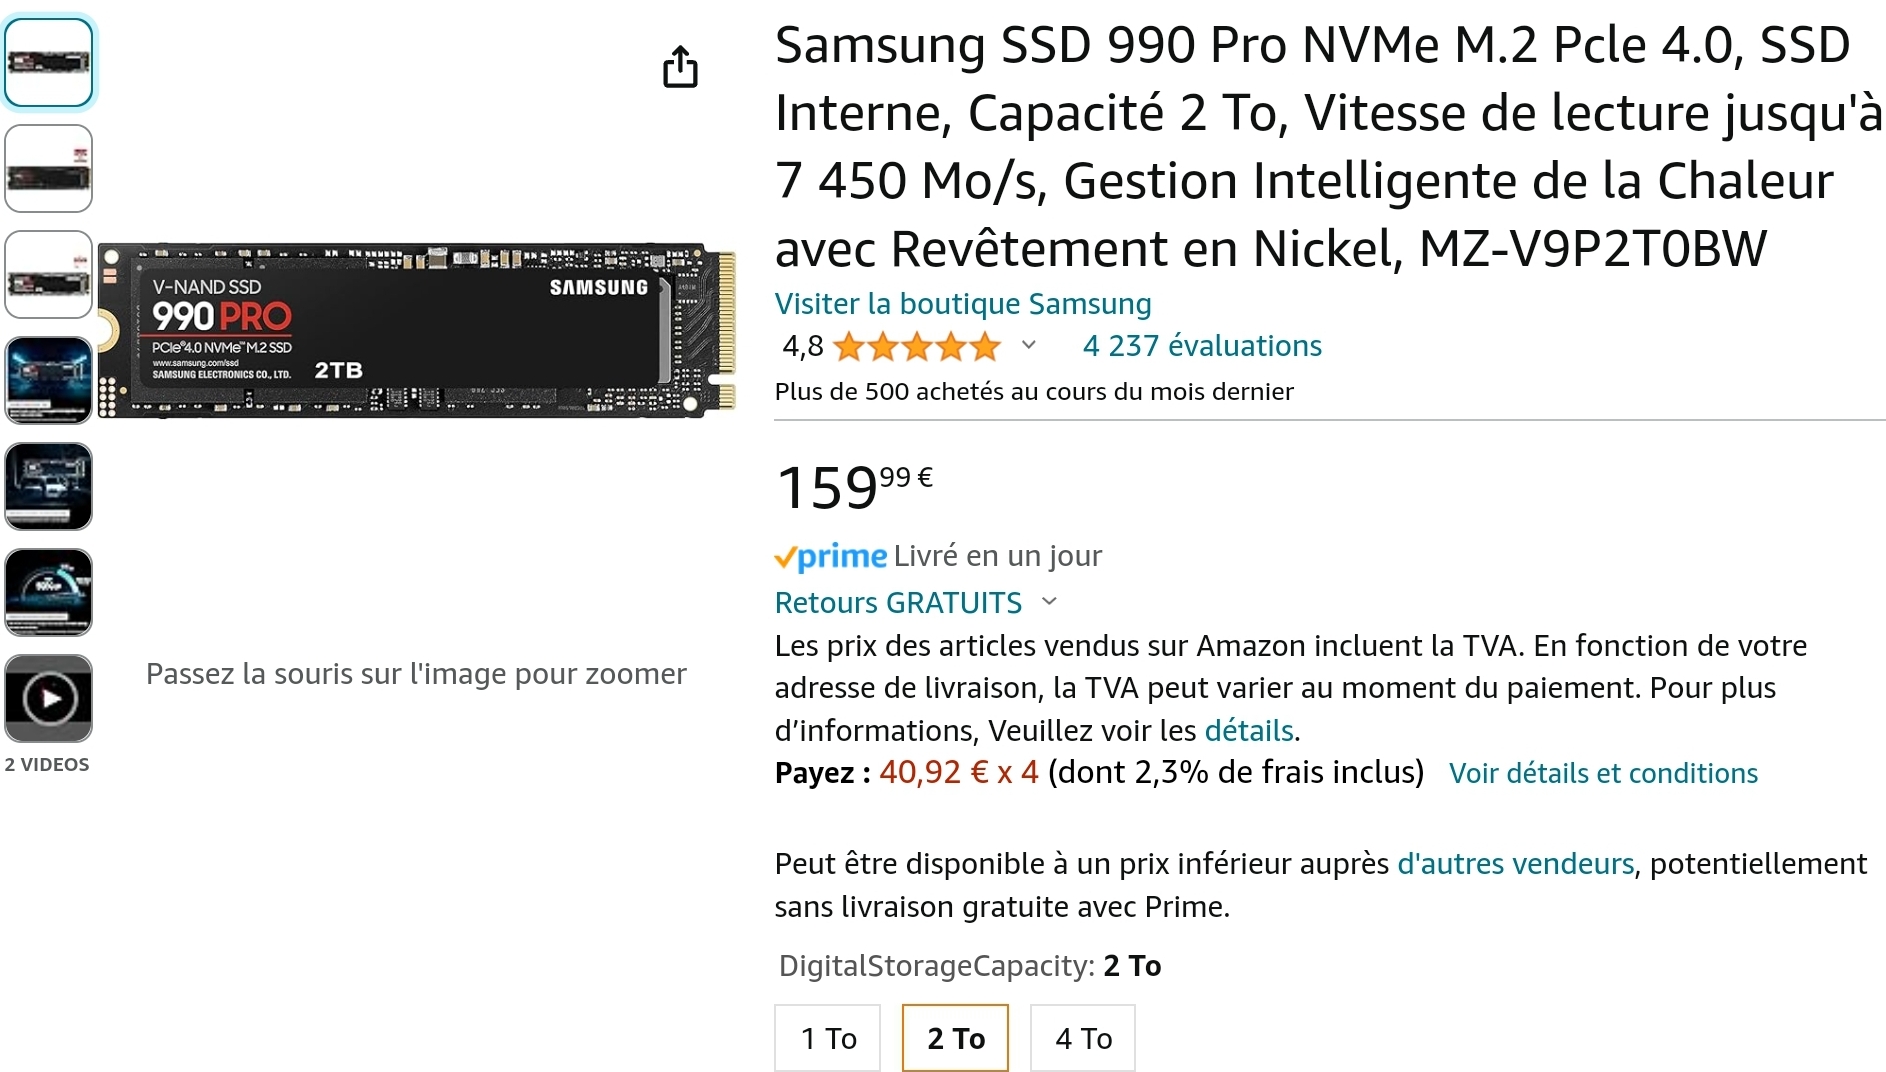 Samsung 990 Evo Review: A Cool PCIe 5.0 SSD